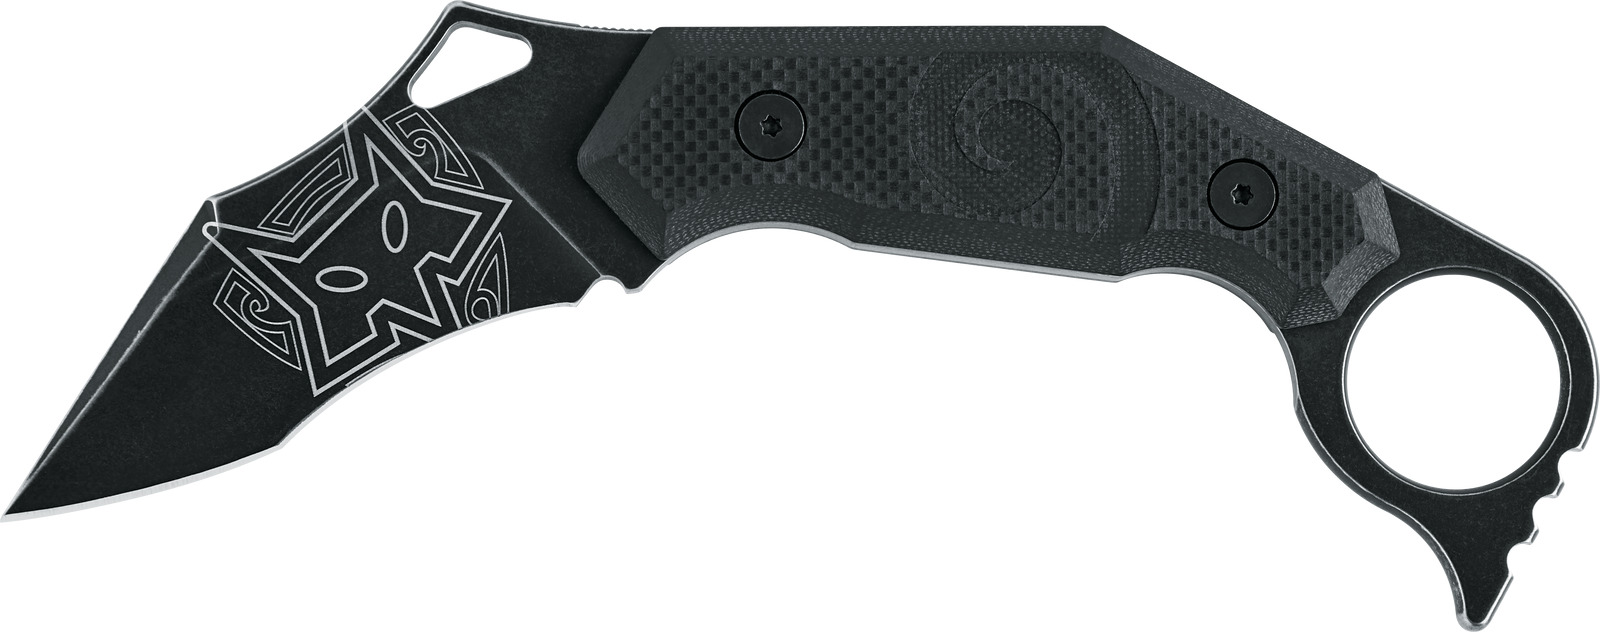 Fox Knives FX-651 Fixed Blade Knife Karambit Black G10 N690Co Stainless